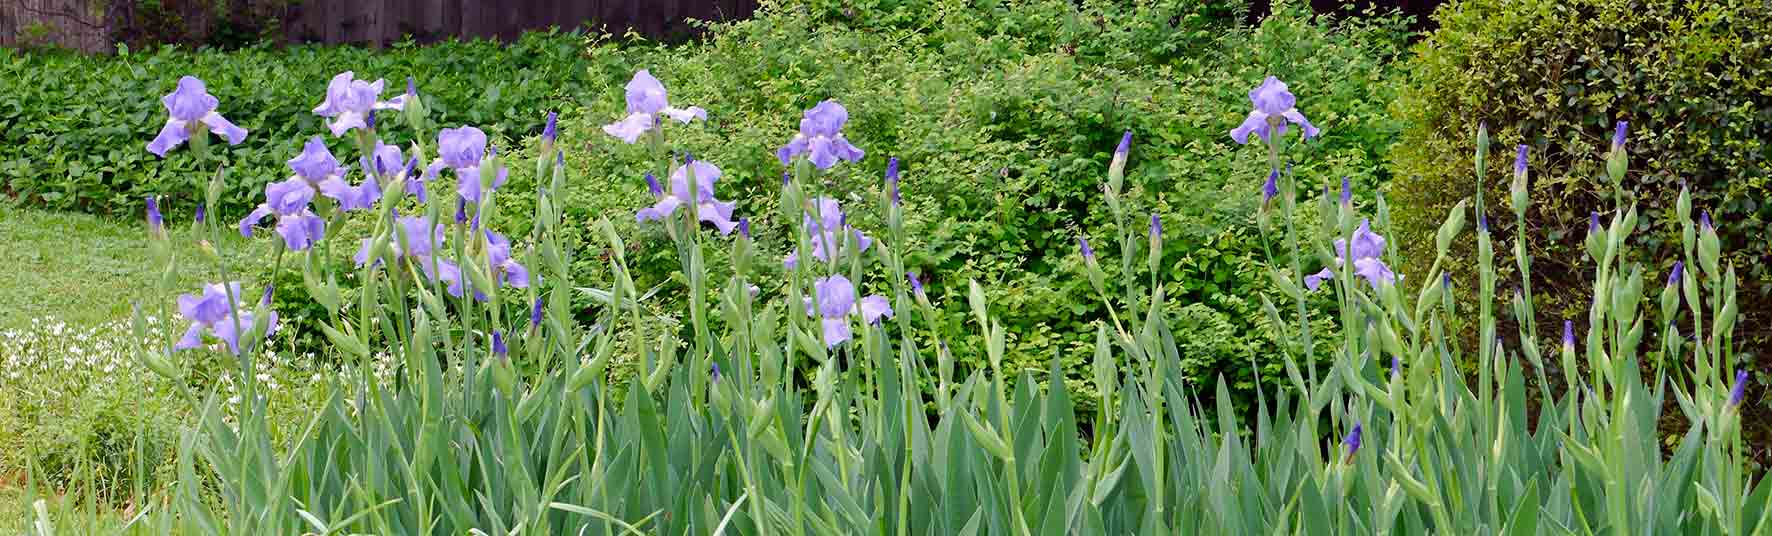 First purple iris blooming in garden at Provence-sur-la-Prairie spring 2016